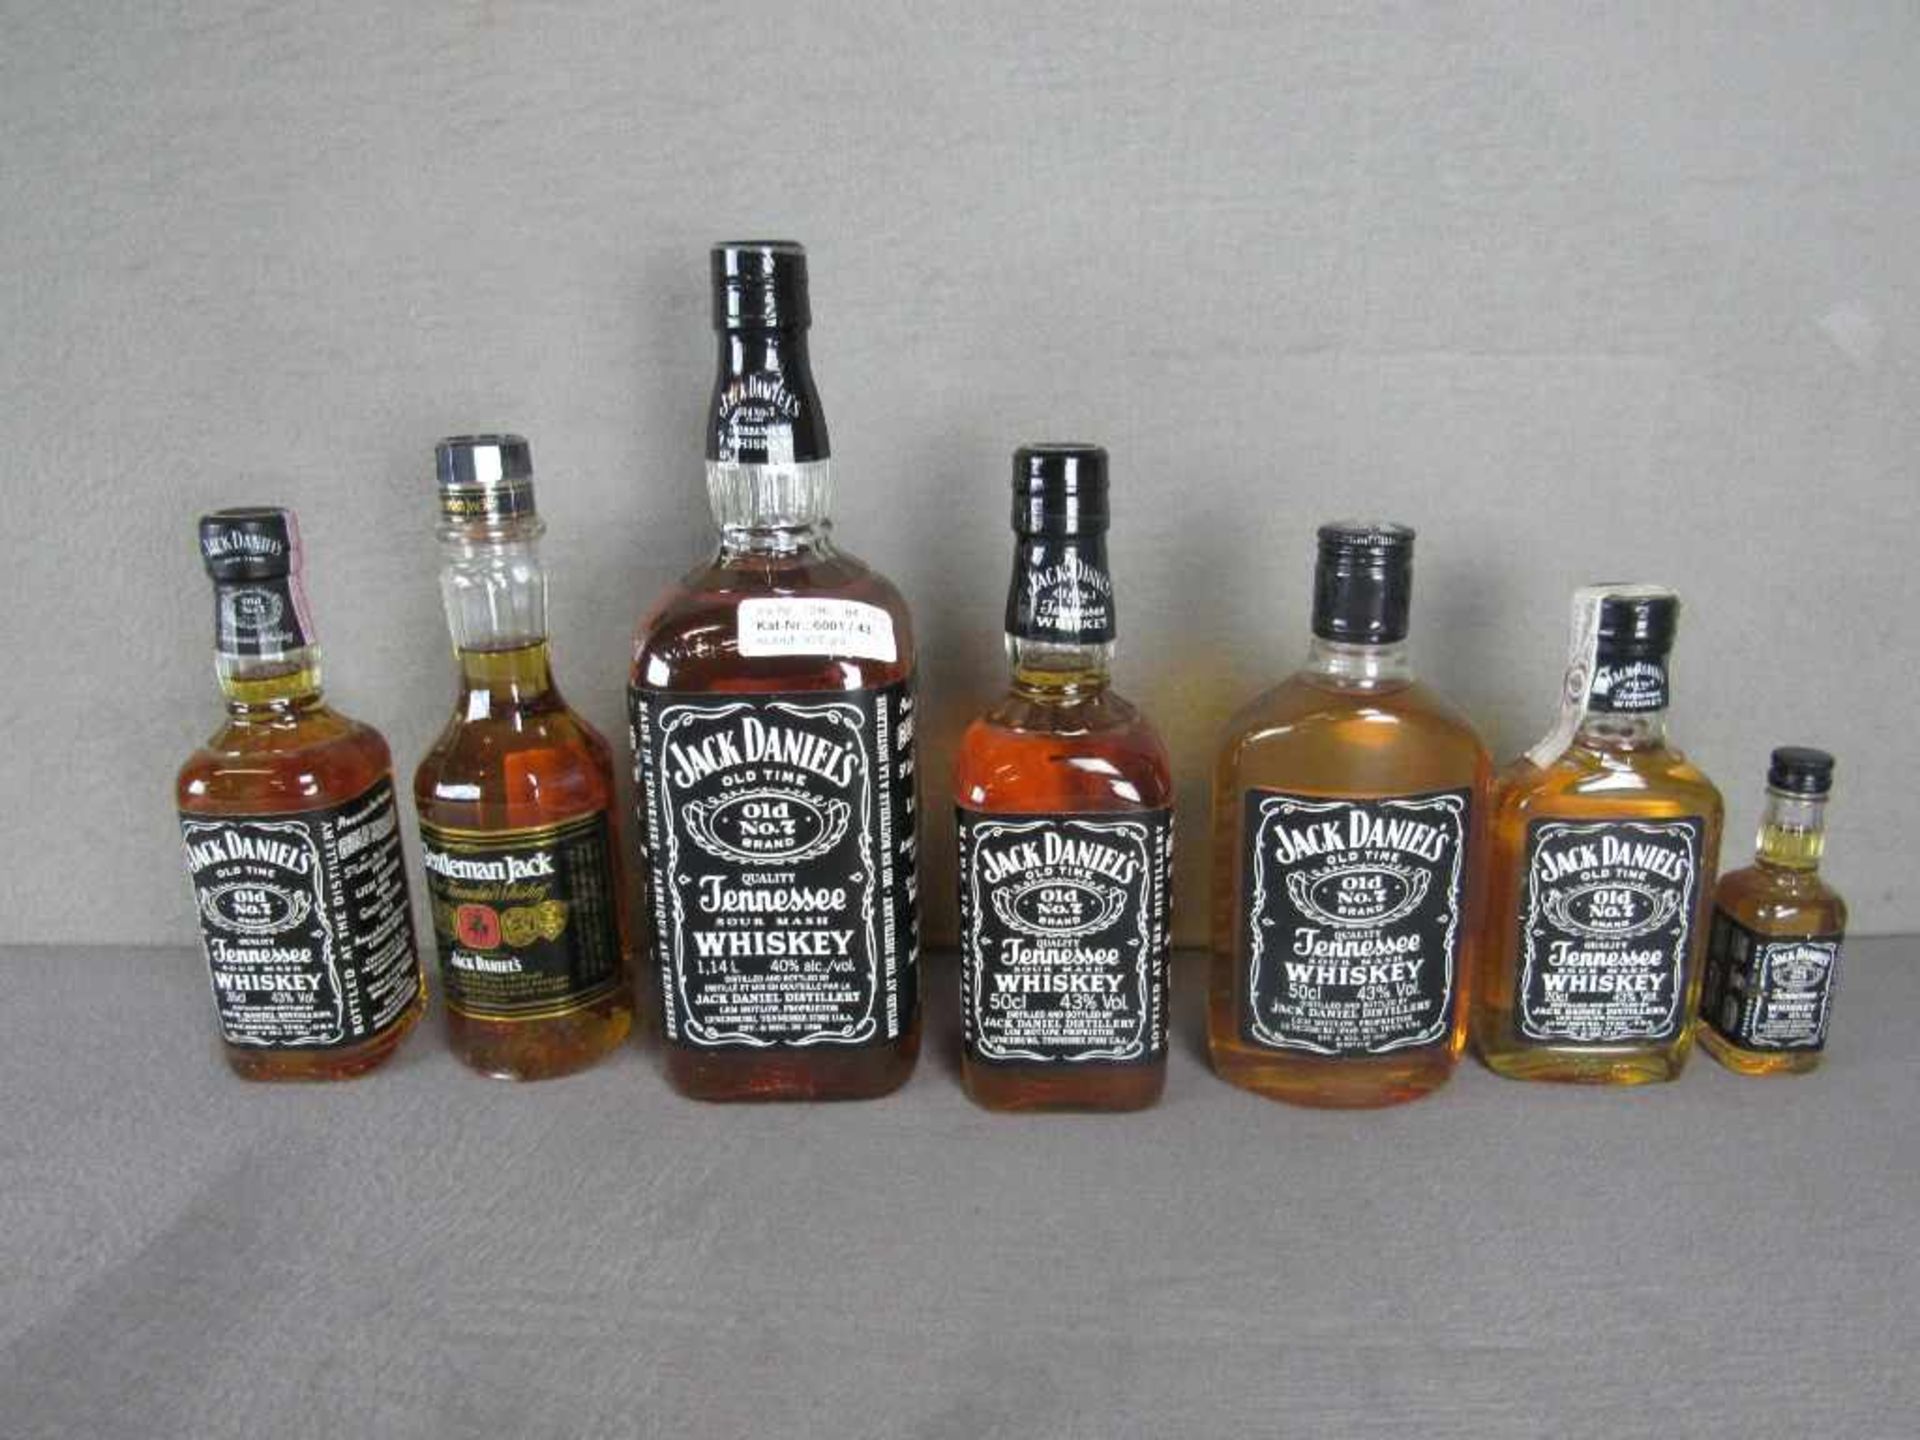 Konvolut Jack Daniels sieben Flaschen unter anderem Gentleman Jack- - -20.00 % buyer's premium on